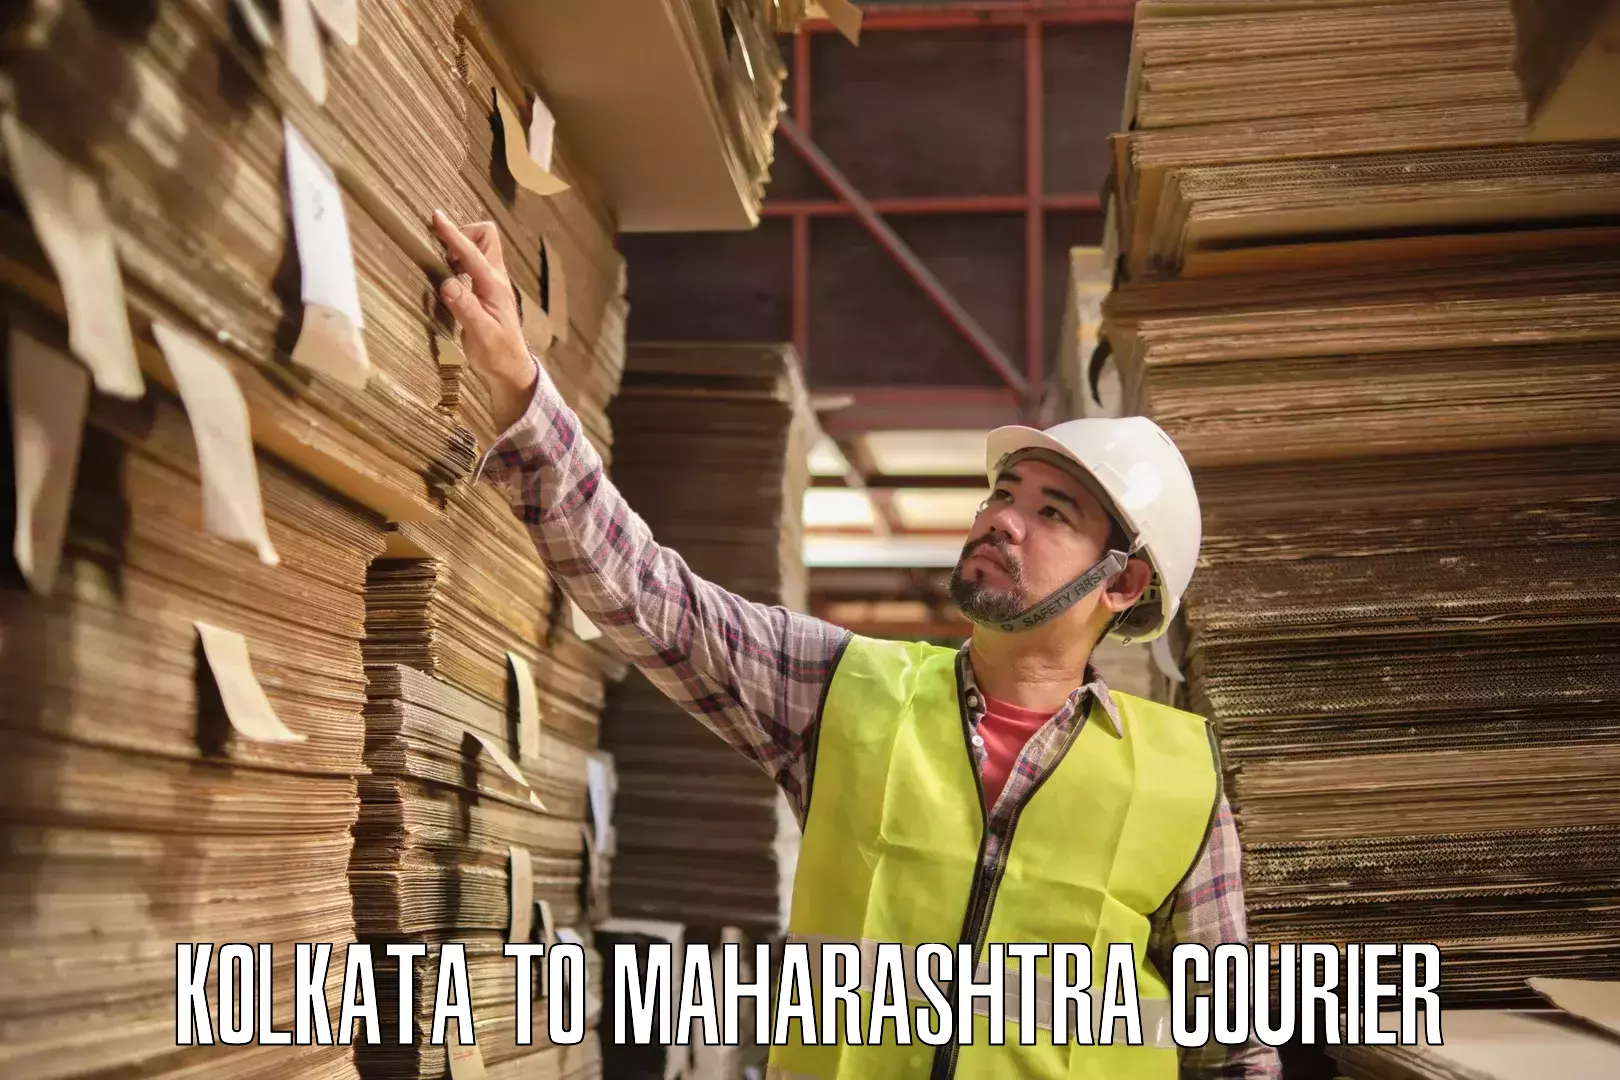 User-friendly courier app Kolkata to Mumbai Port